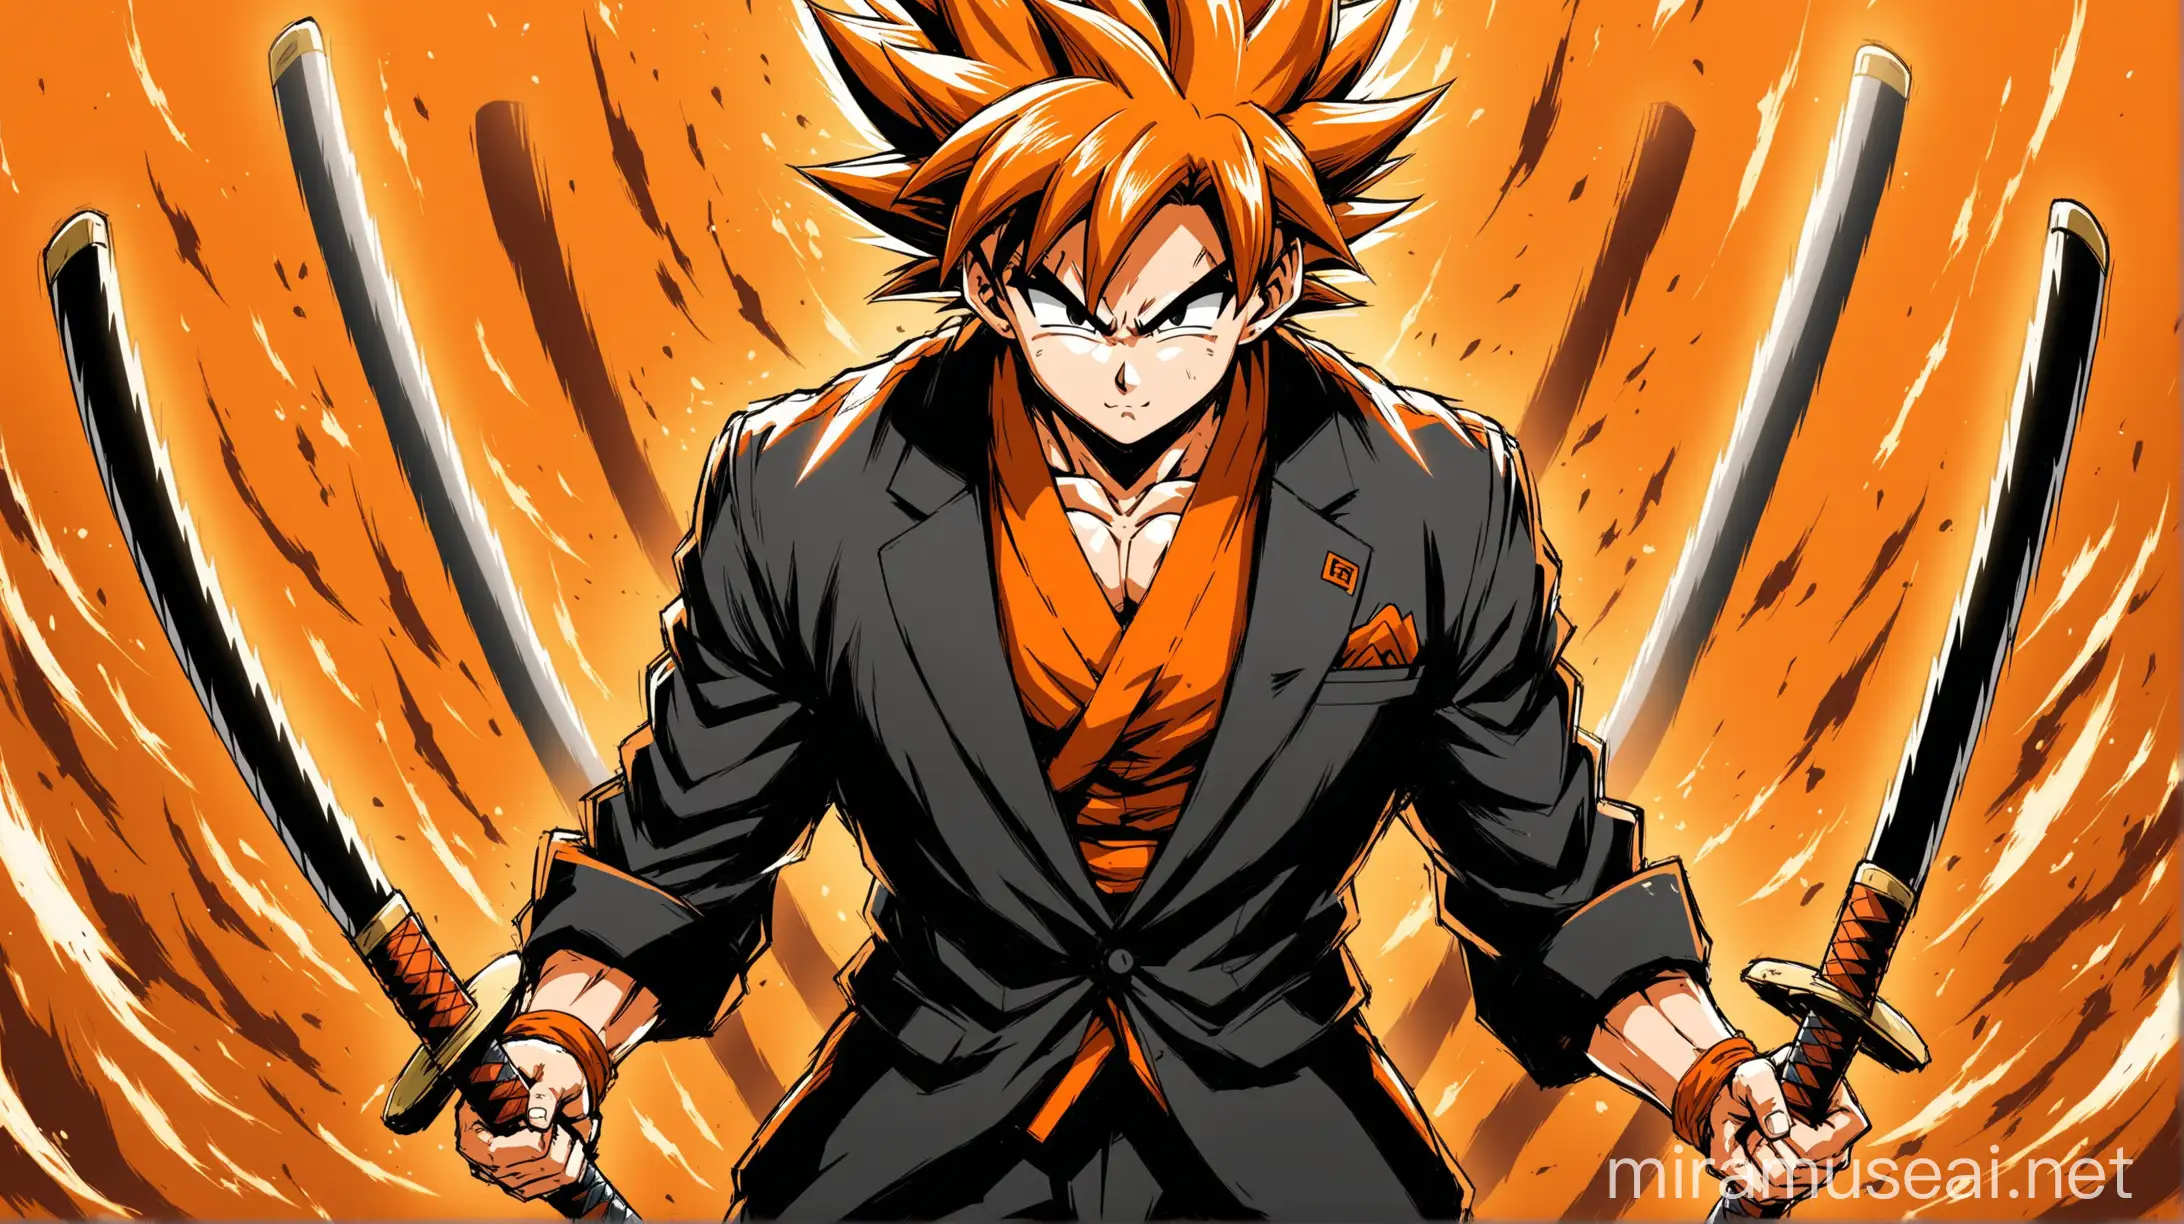 Stylish Goku with Dual Katanas in Orange and Black Business Attire